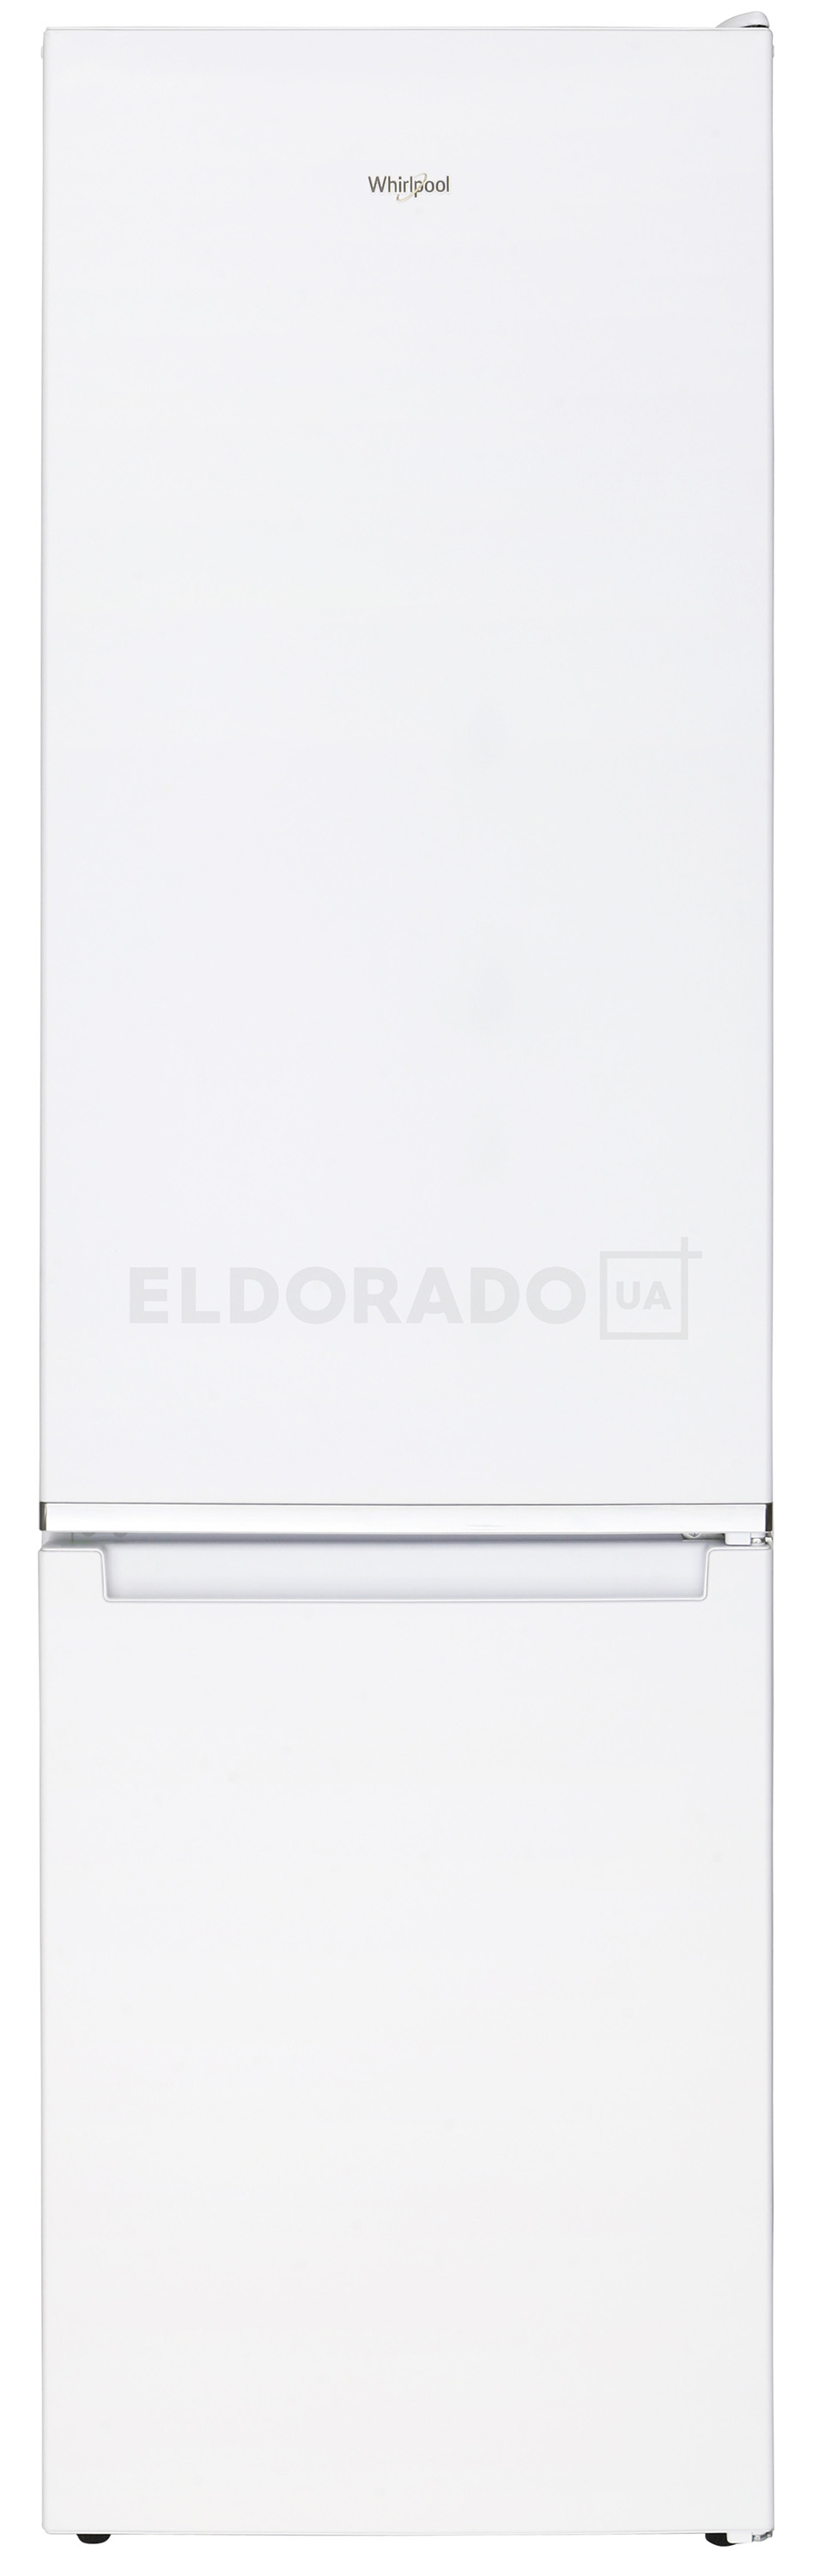 Акция на Холодильник WHIRLPOOL W9 921C W от Eldorado